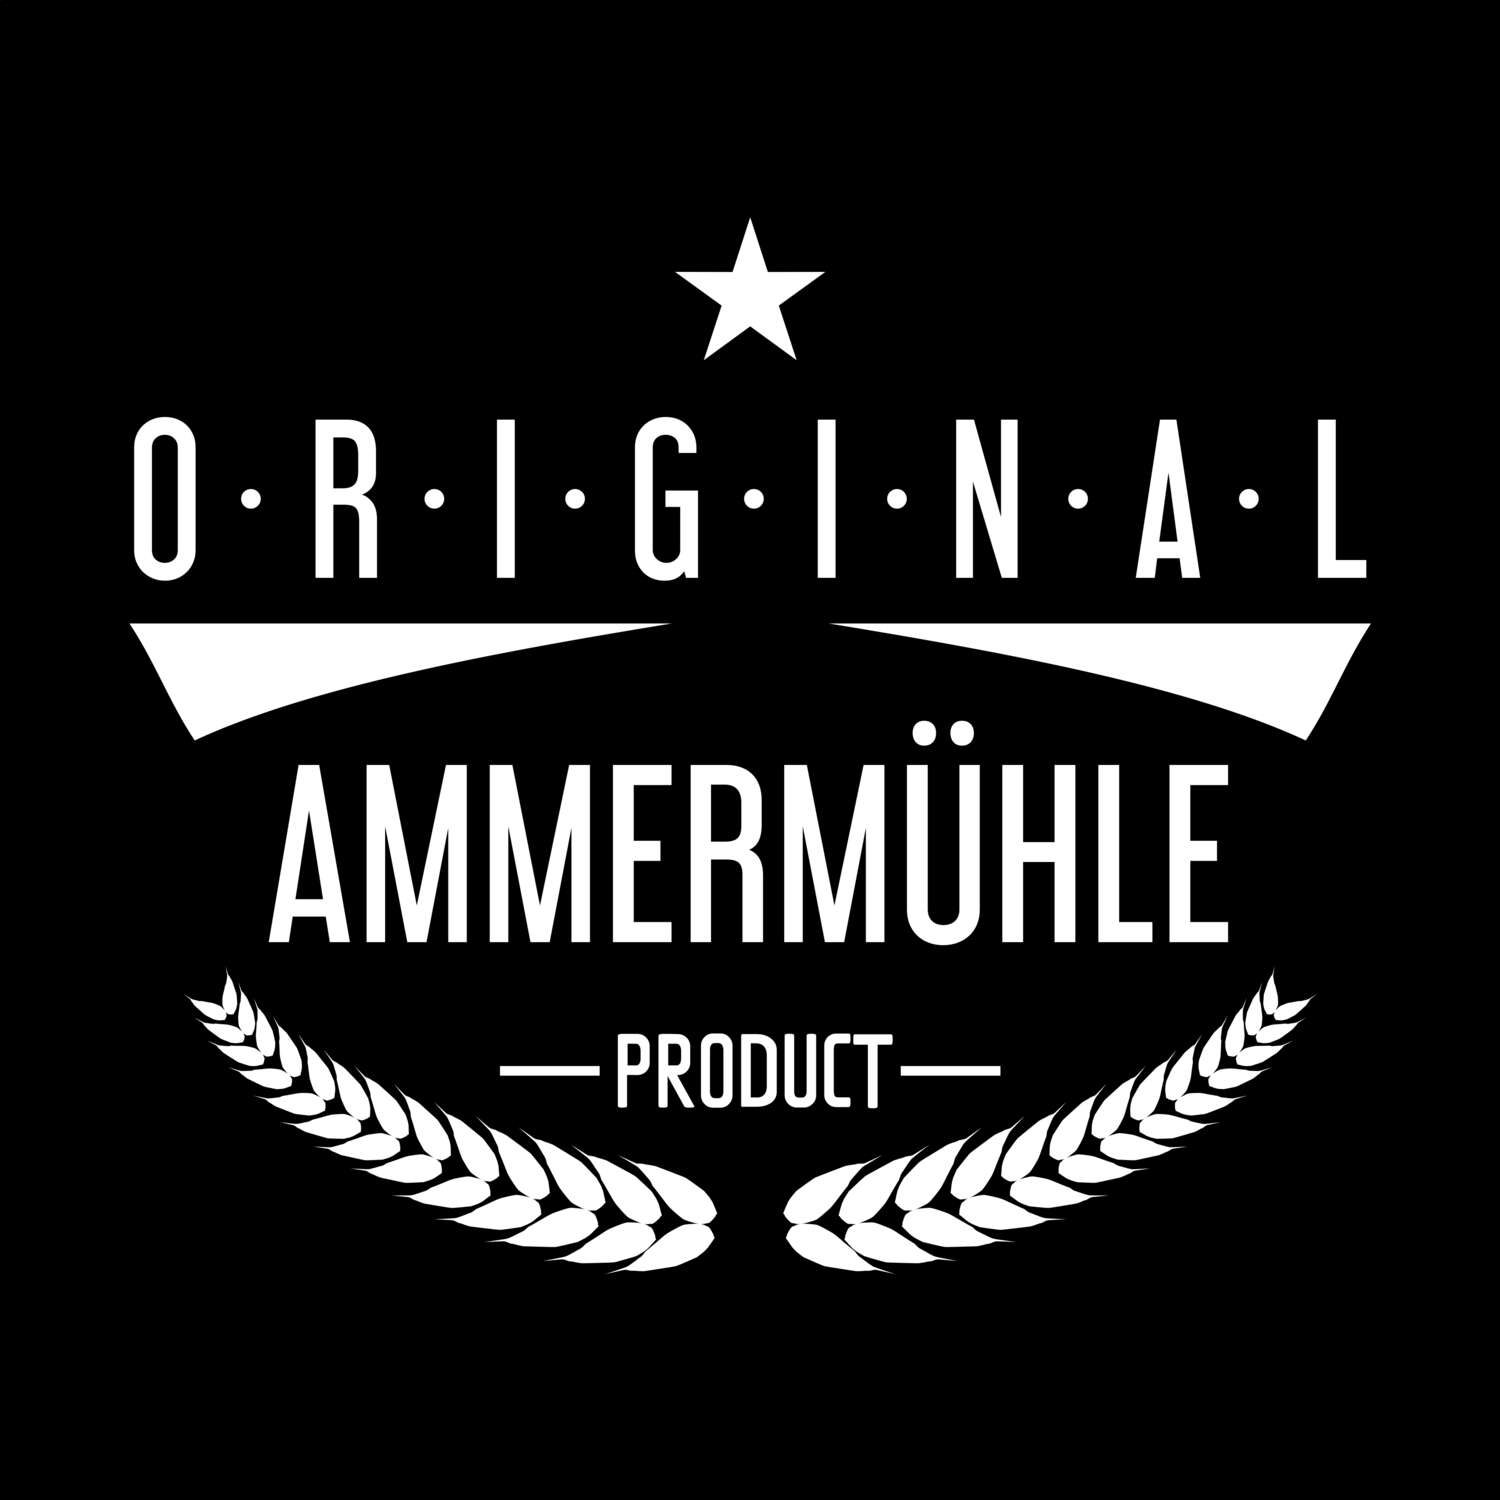 Ammermühle T-Shirt »Original Product«